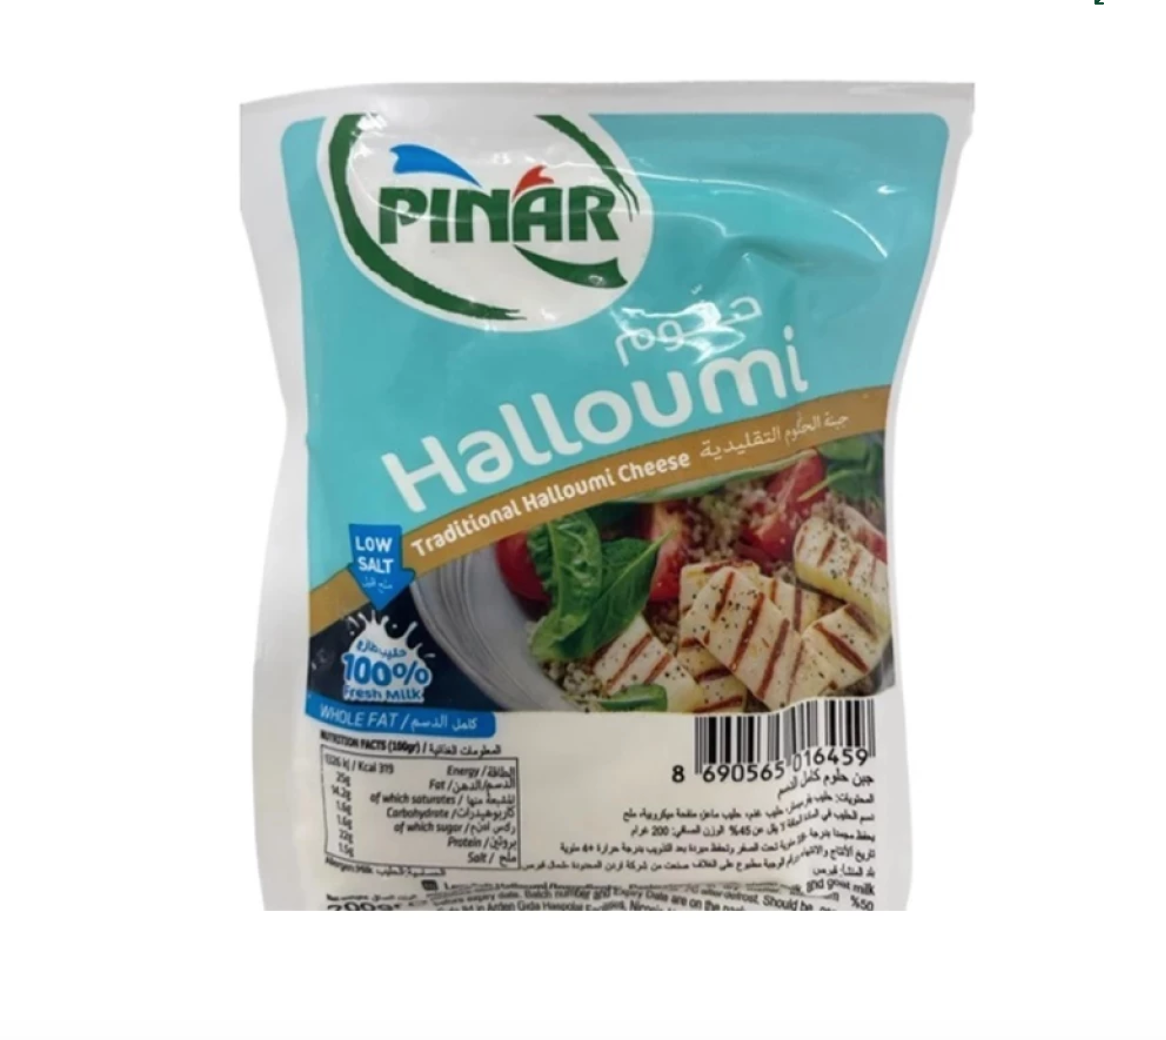 pinar-halloumi-cheese-whole-fat-low-salt